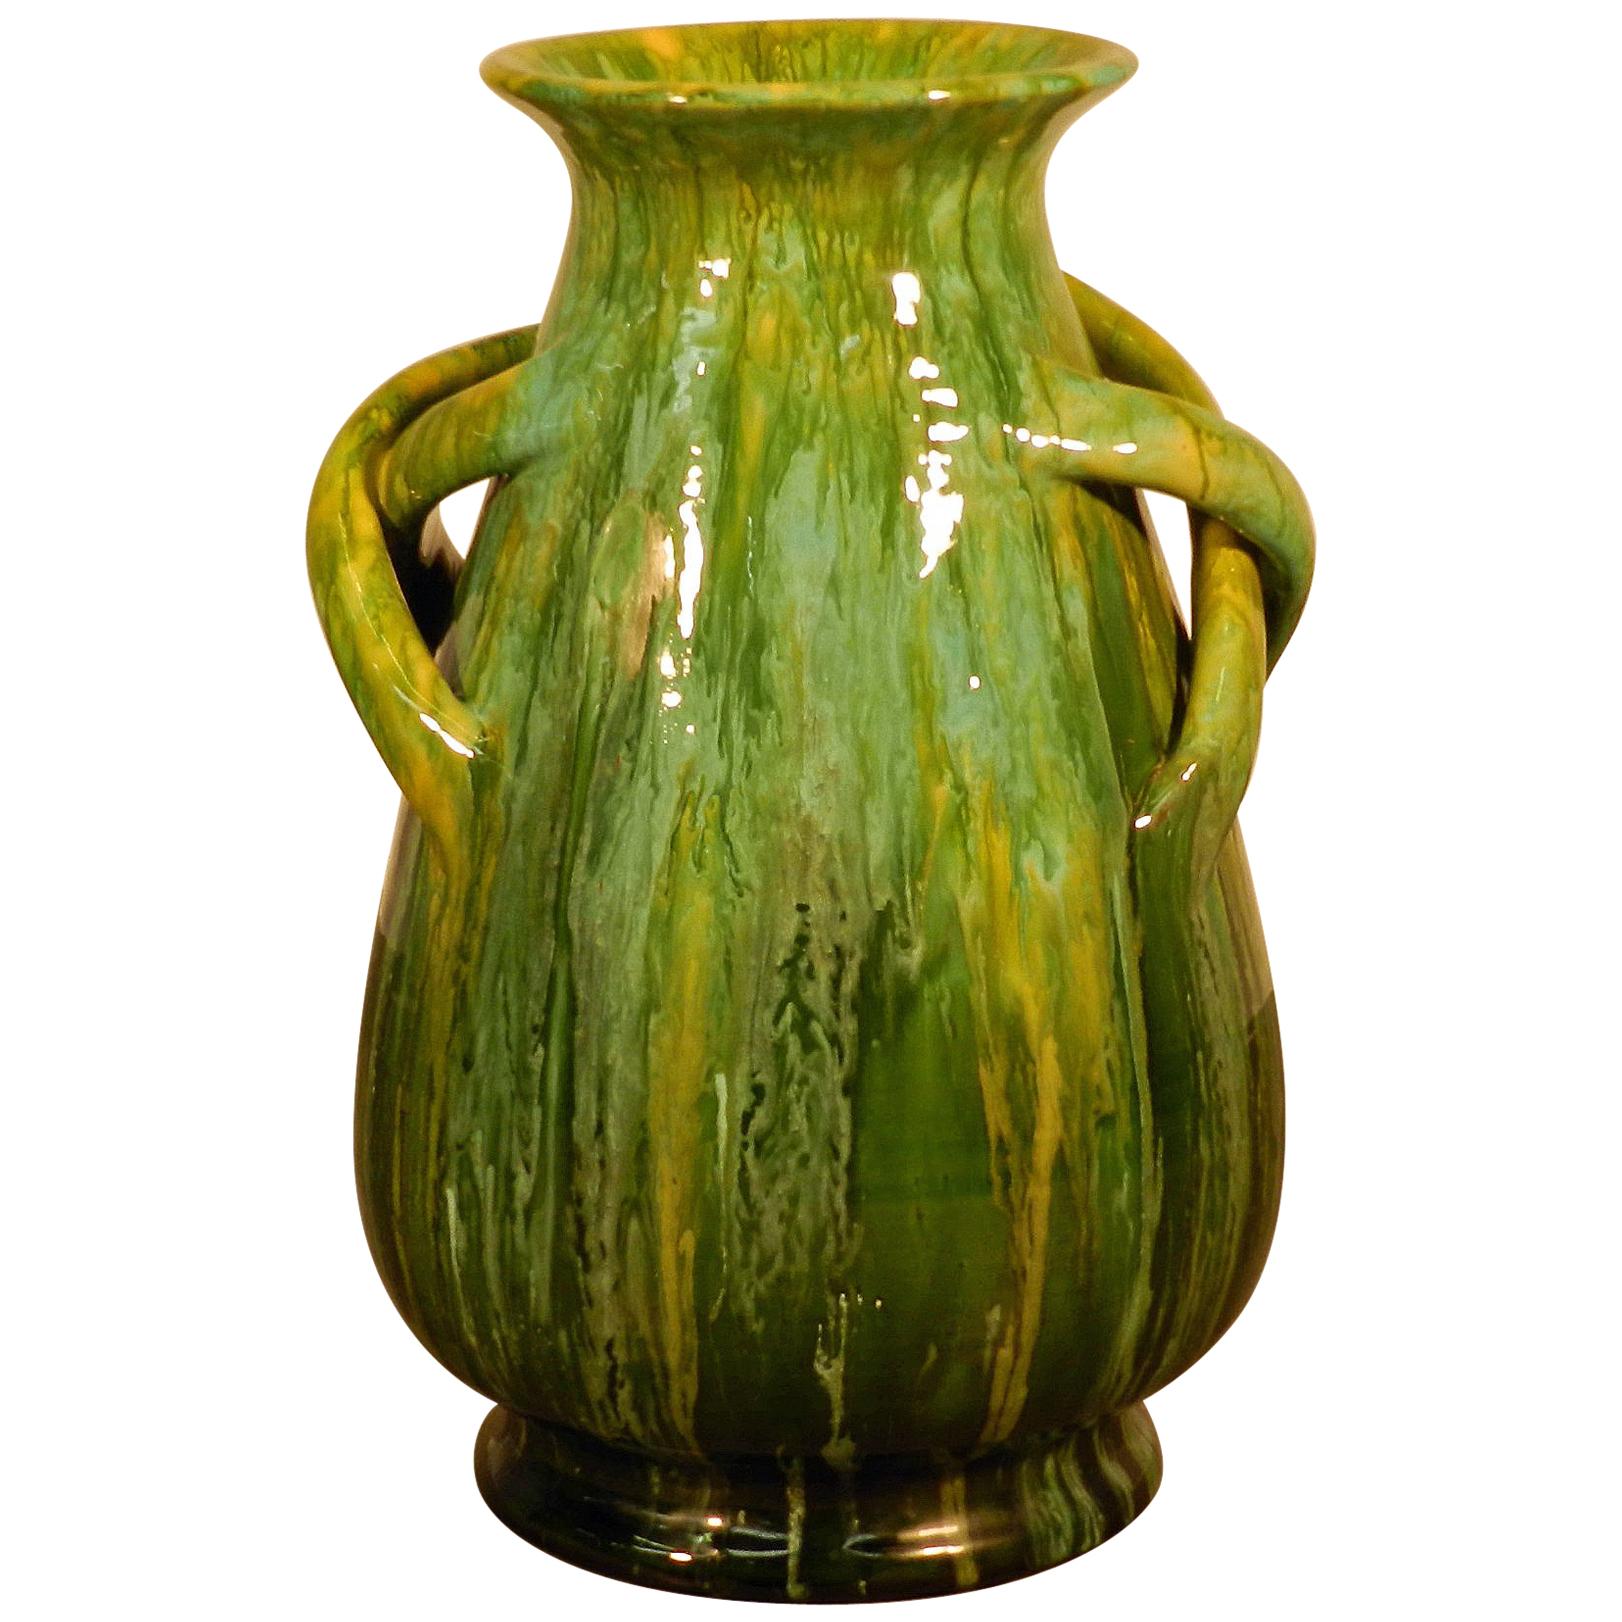 Bavent, Ceramic Vase Art Nouveau, Signed TN "tuilerie Normande" Bavent, 1900 For Sale